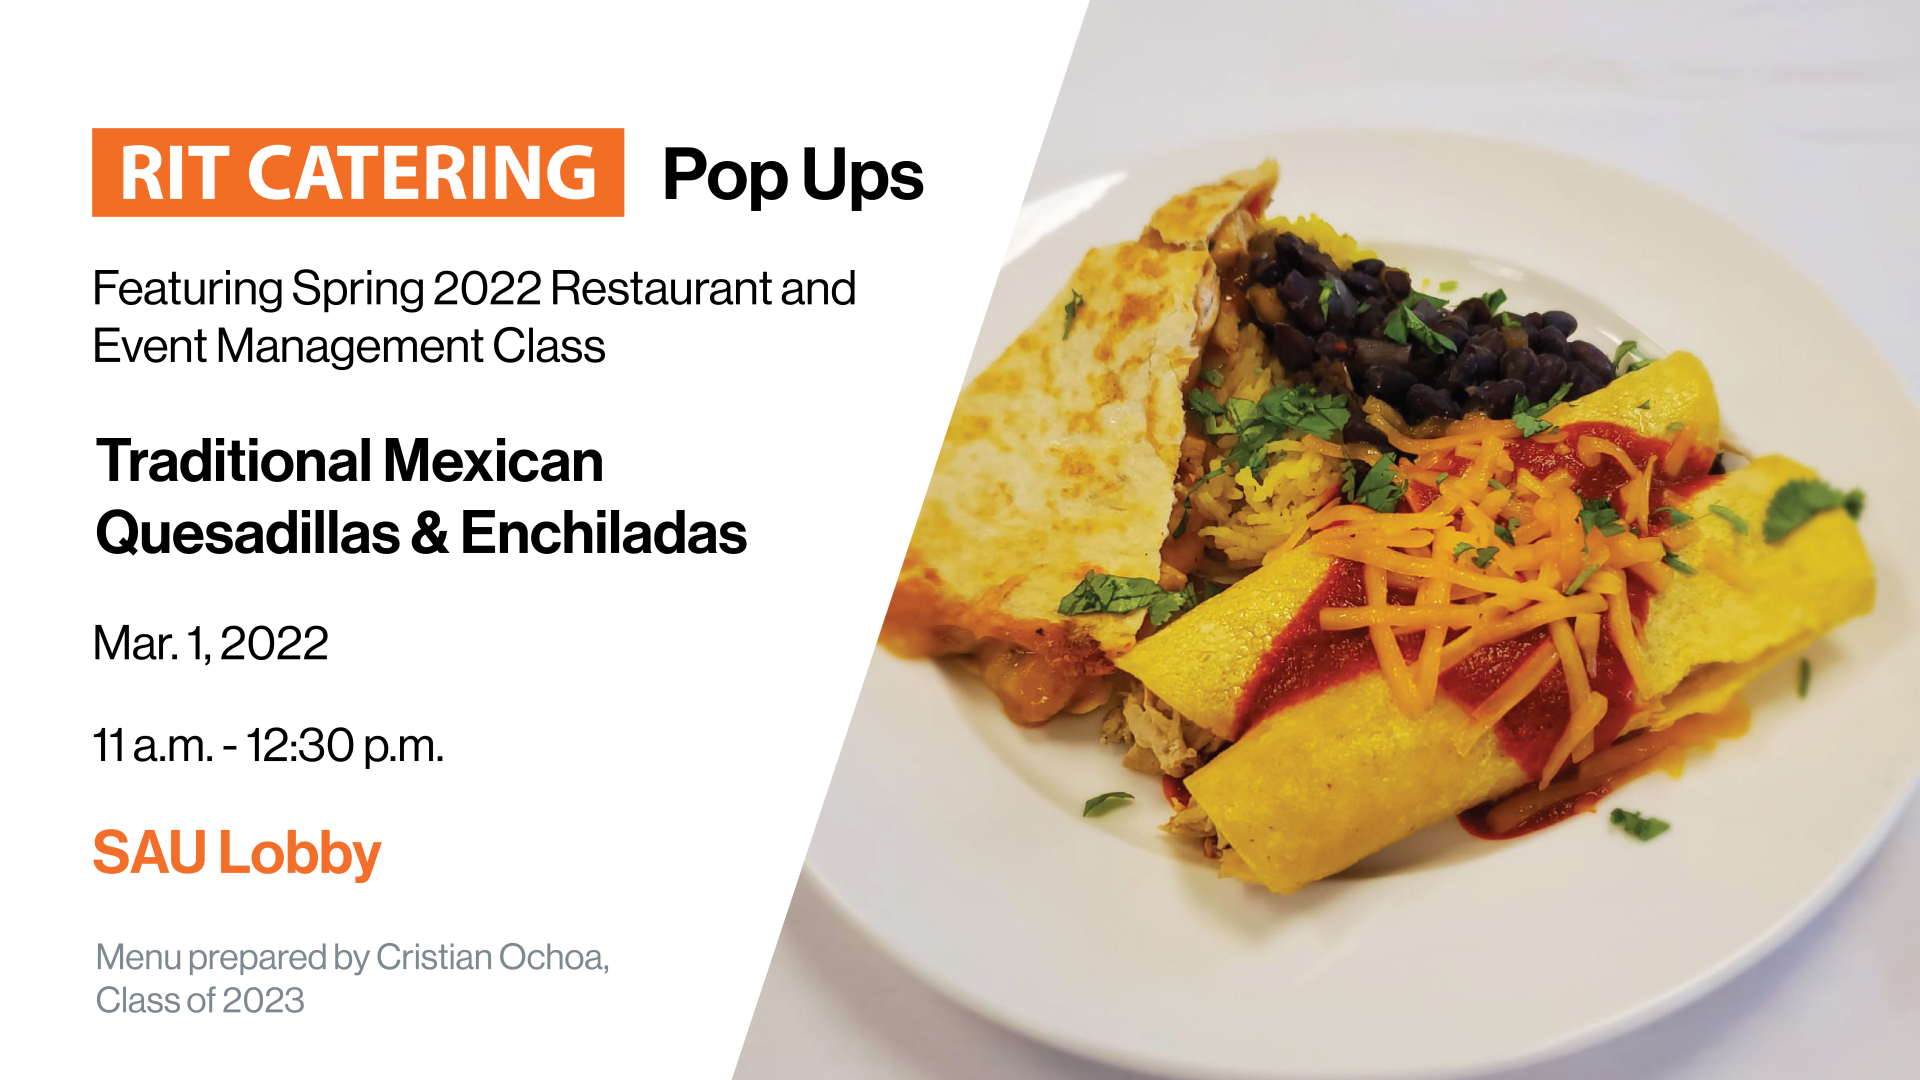 Enchilada, Quesadilla and event details